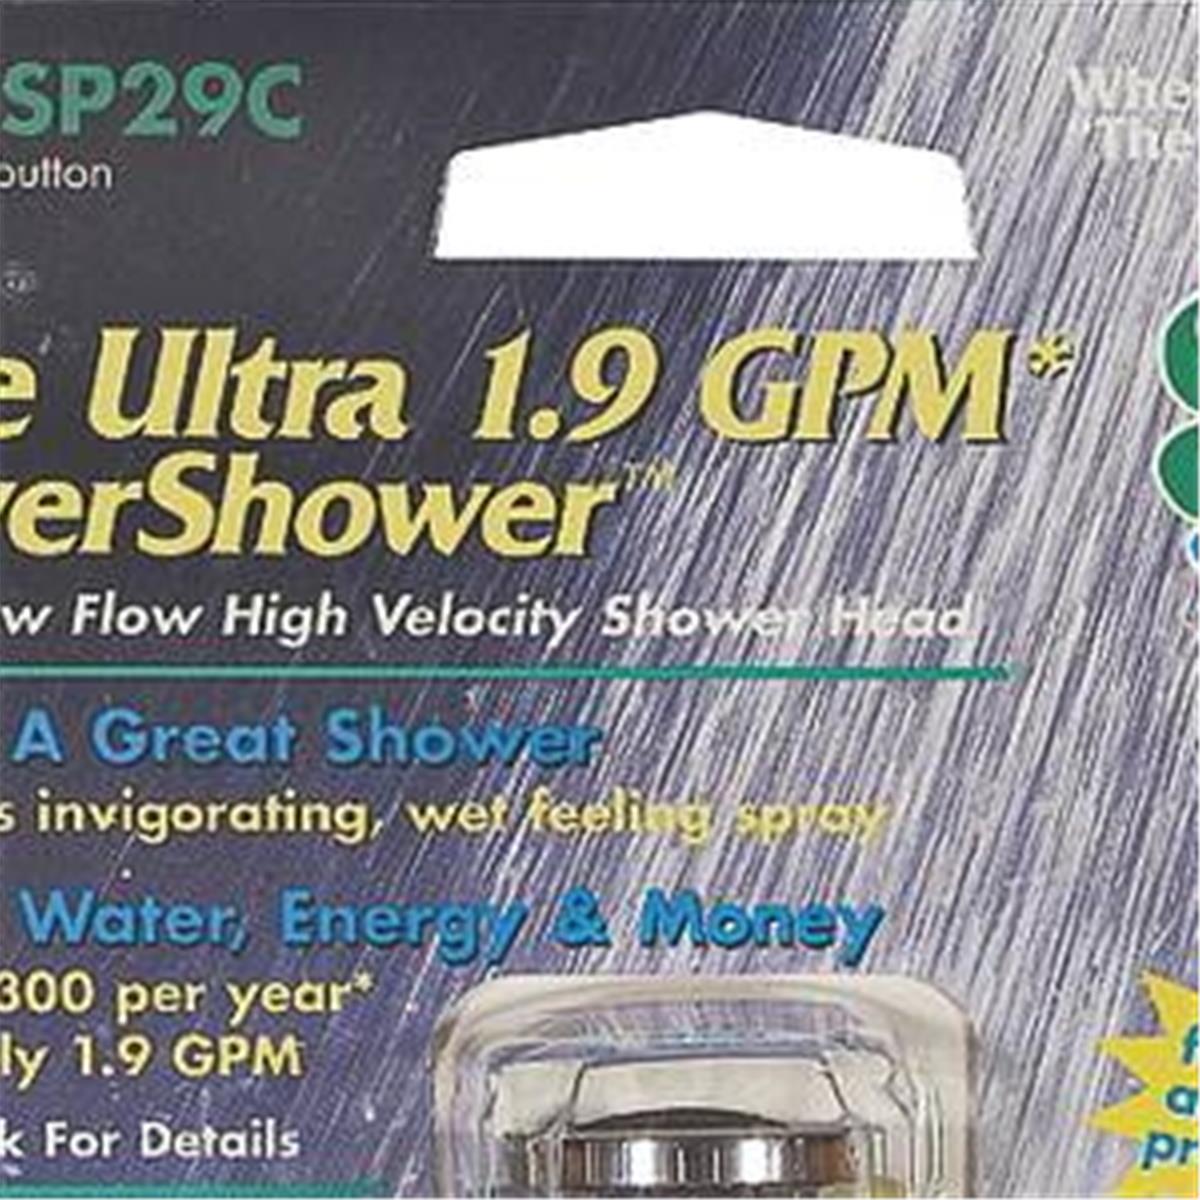 Usp2c 1.8 Dl Ultra Saver Shower Plus